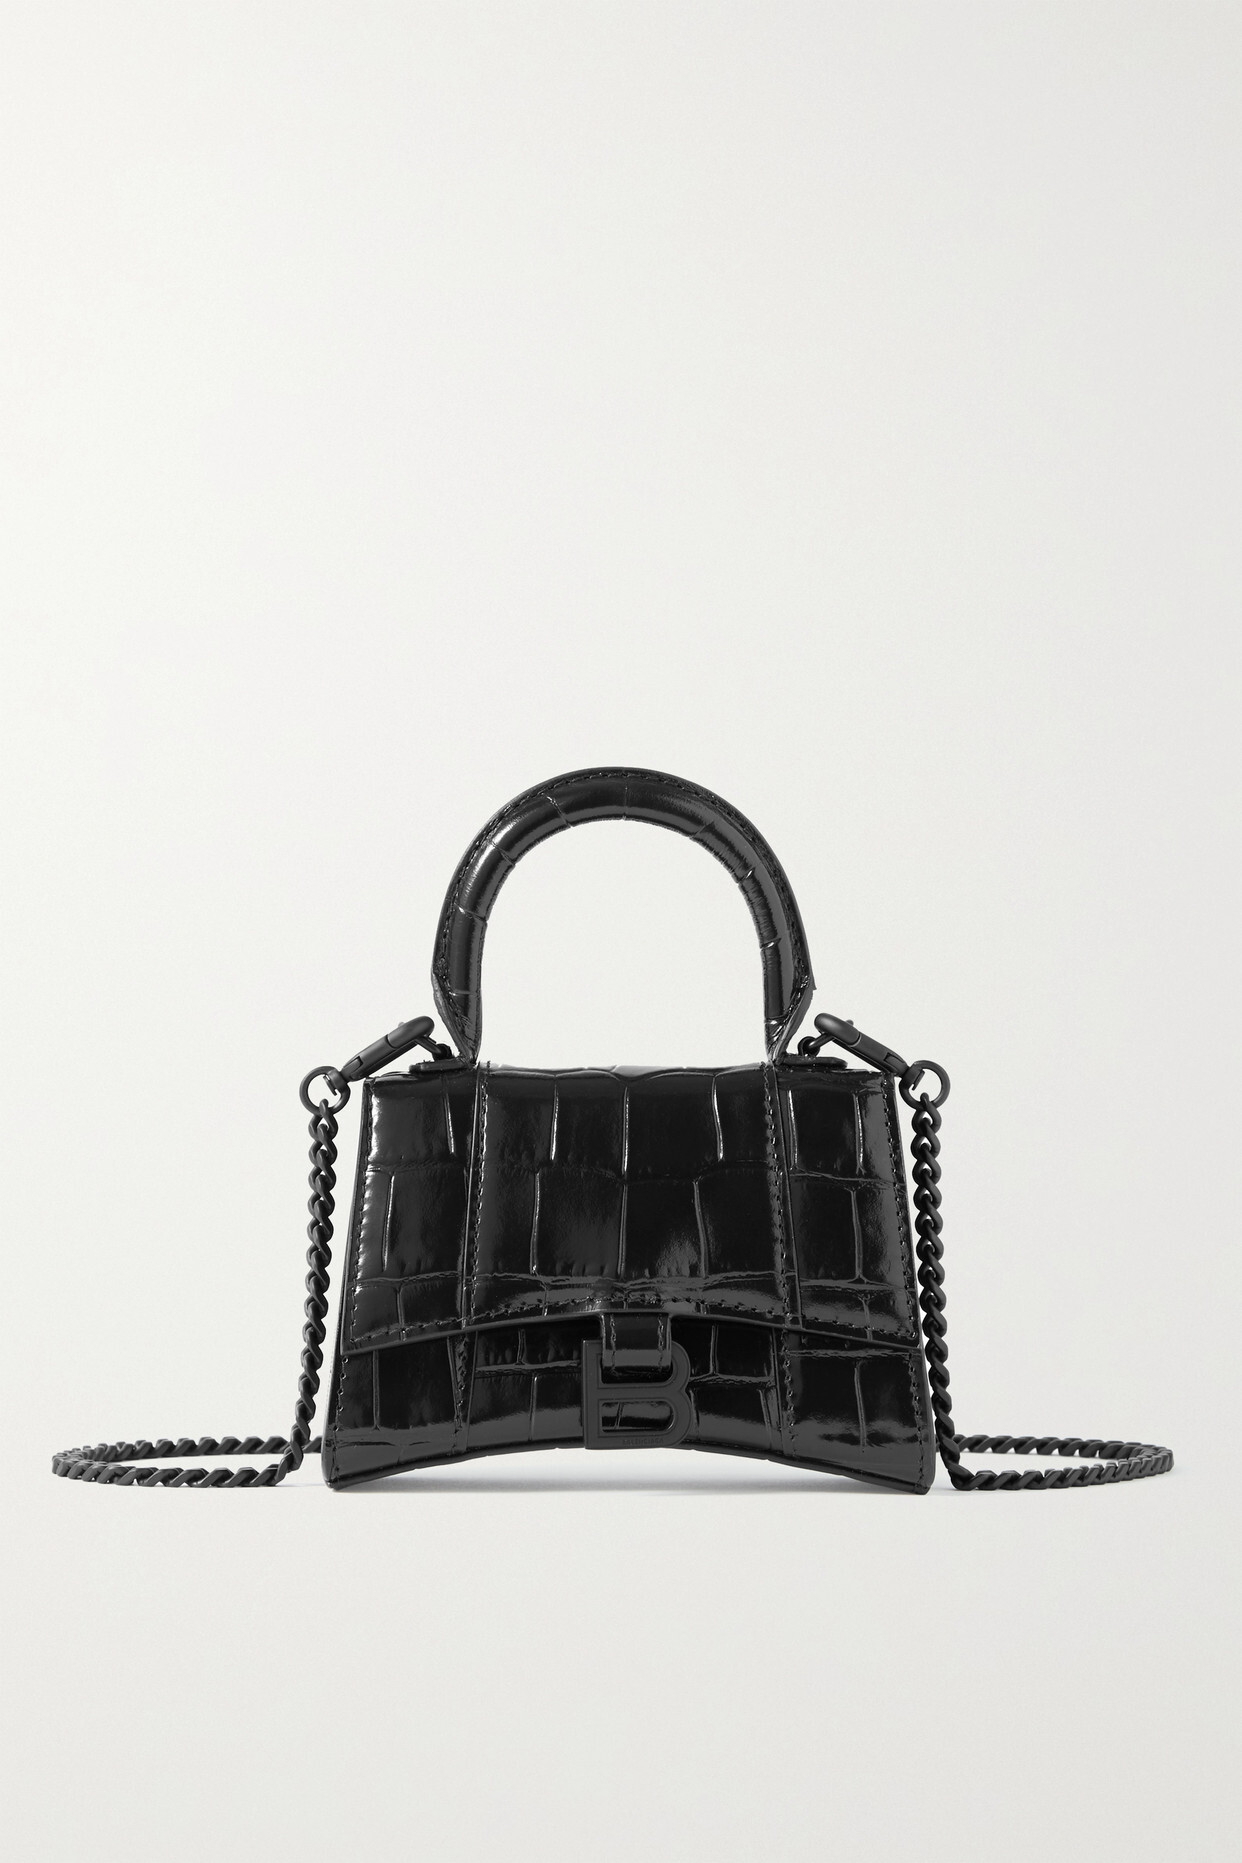 Balenciaga - Hourglass Mini Croc-effect Leather Tote - Black